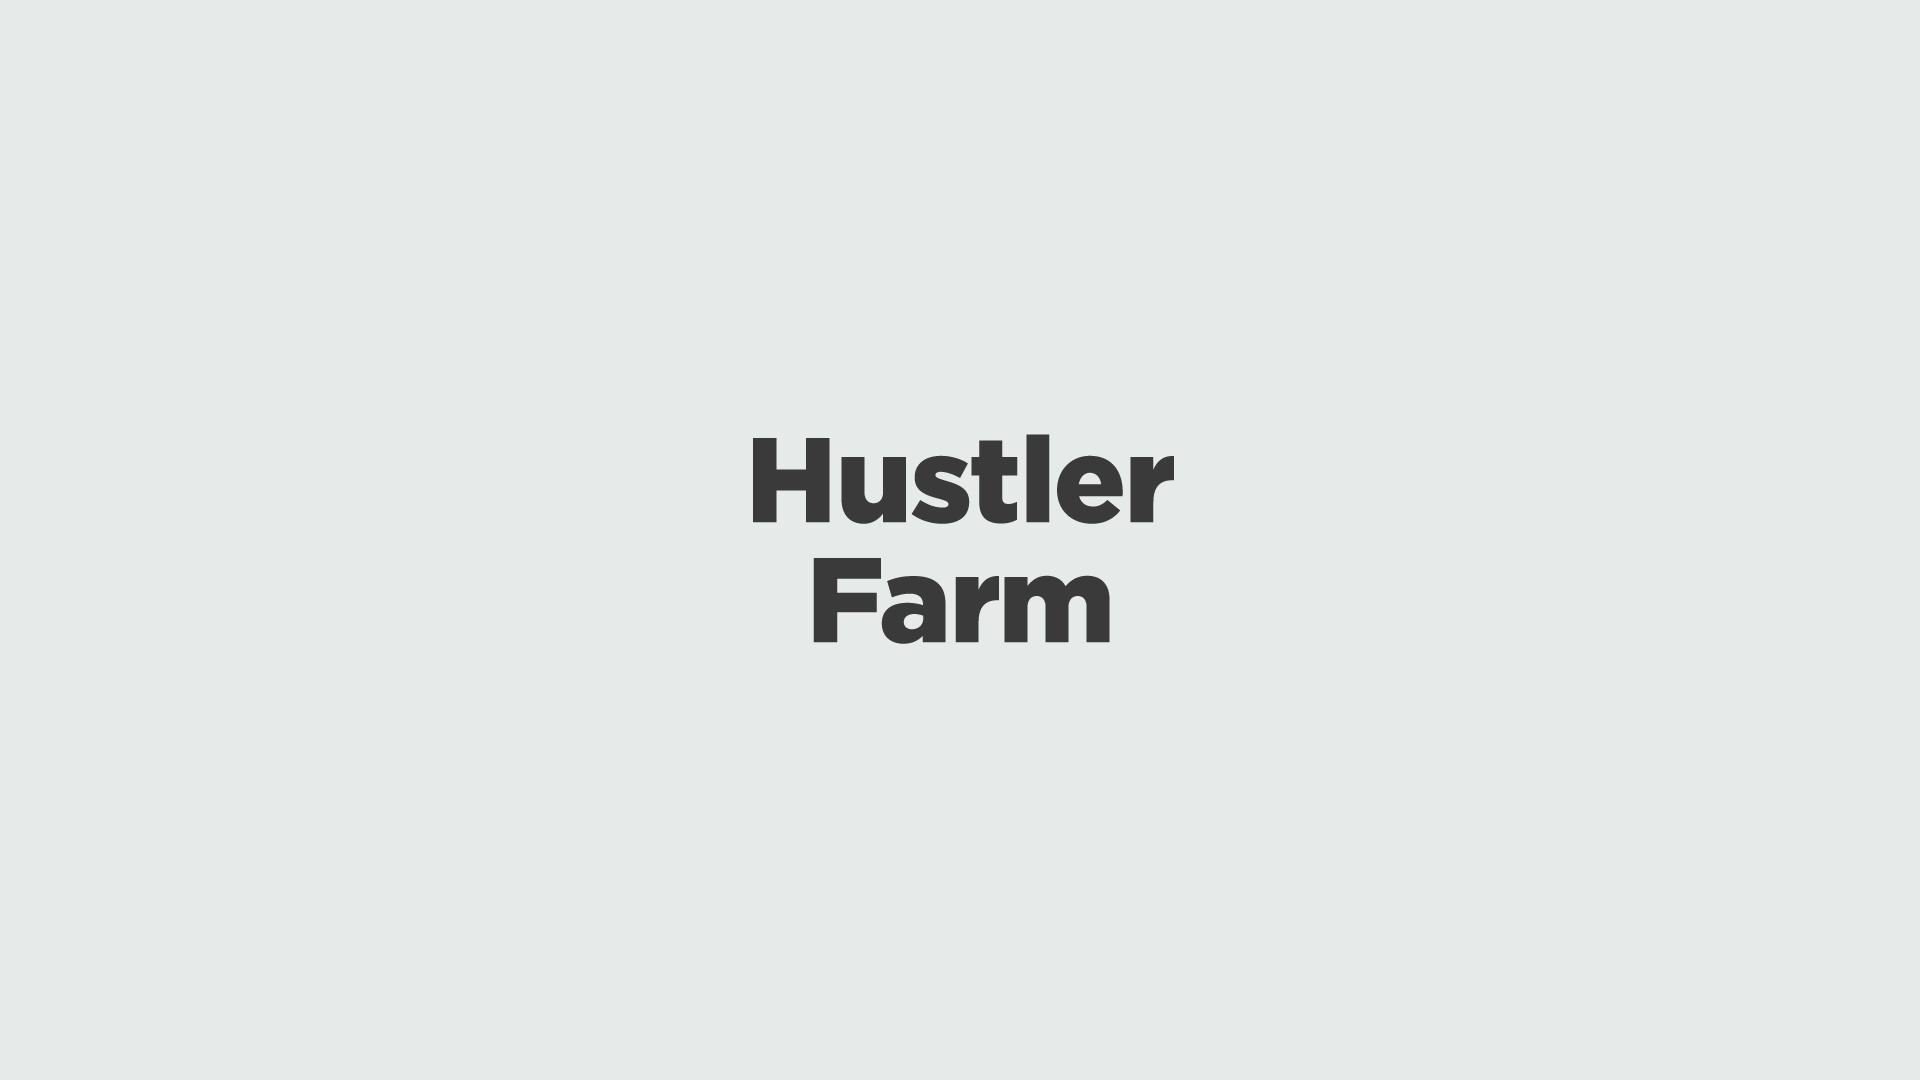 Hustler Farm